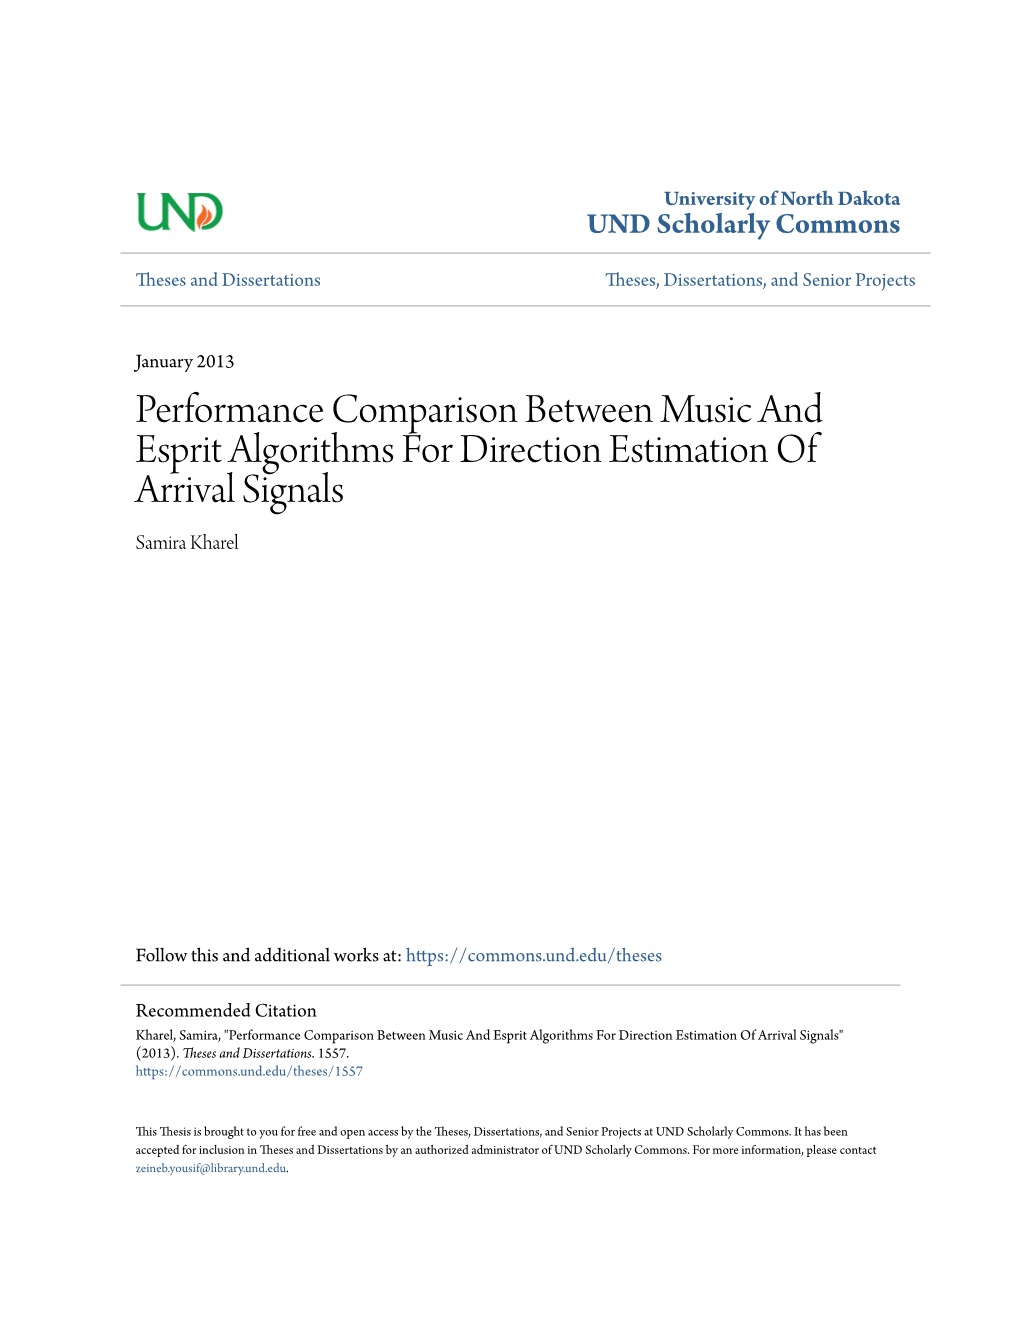 Performance Comparison Between Music and Esprit Algorithms for Direction Estimation of Arrival Signals Samira Kharel